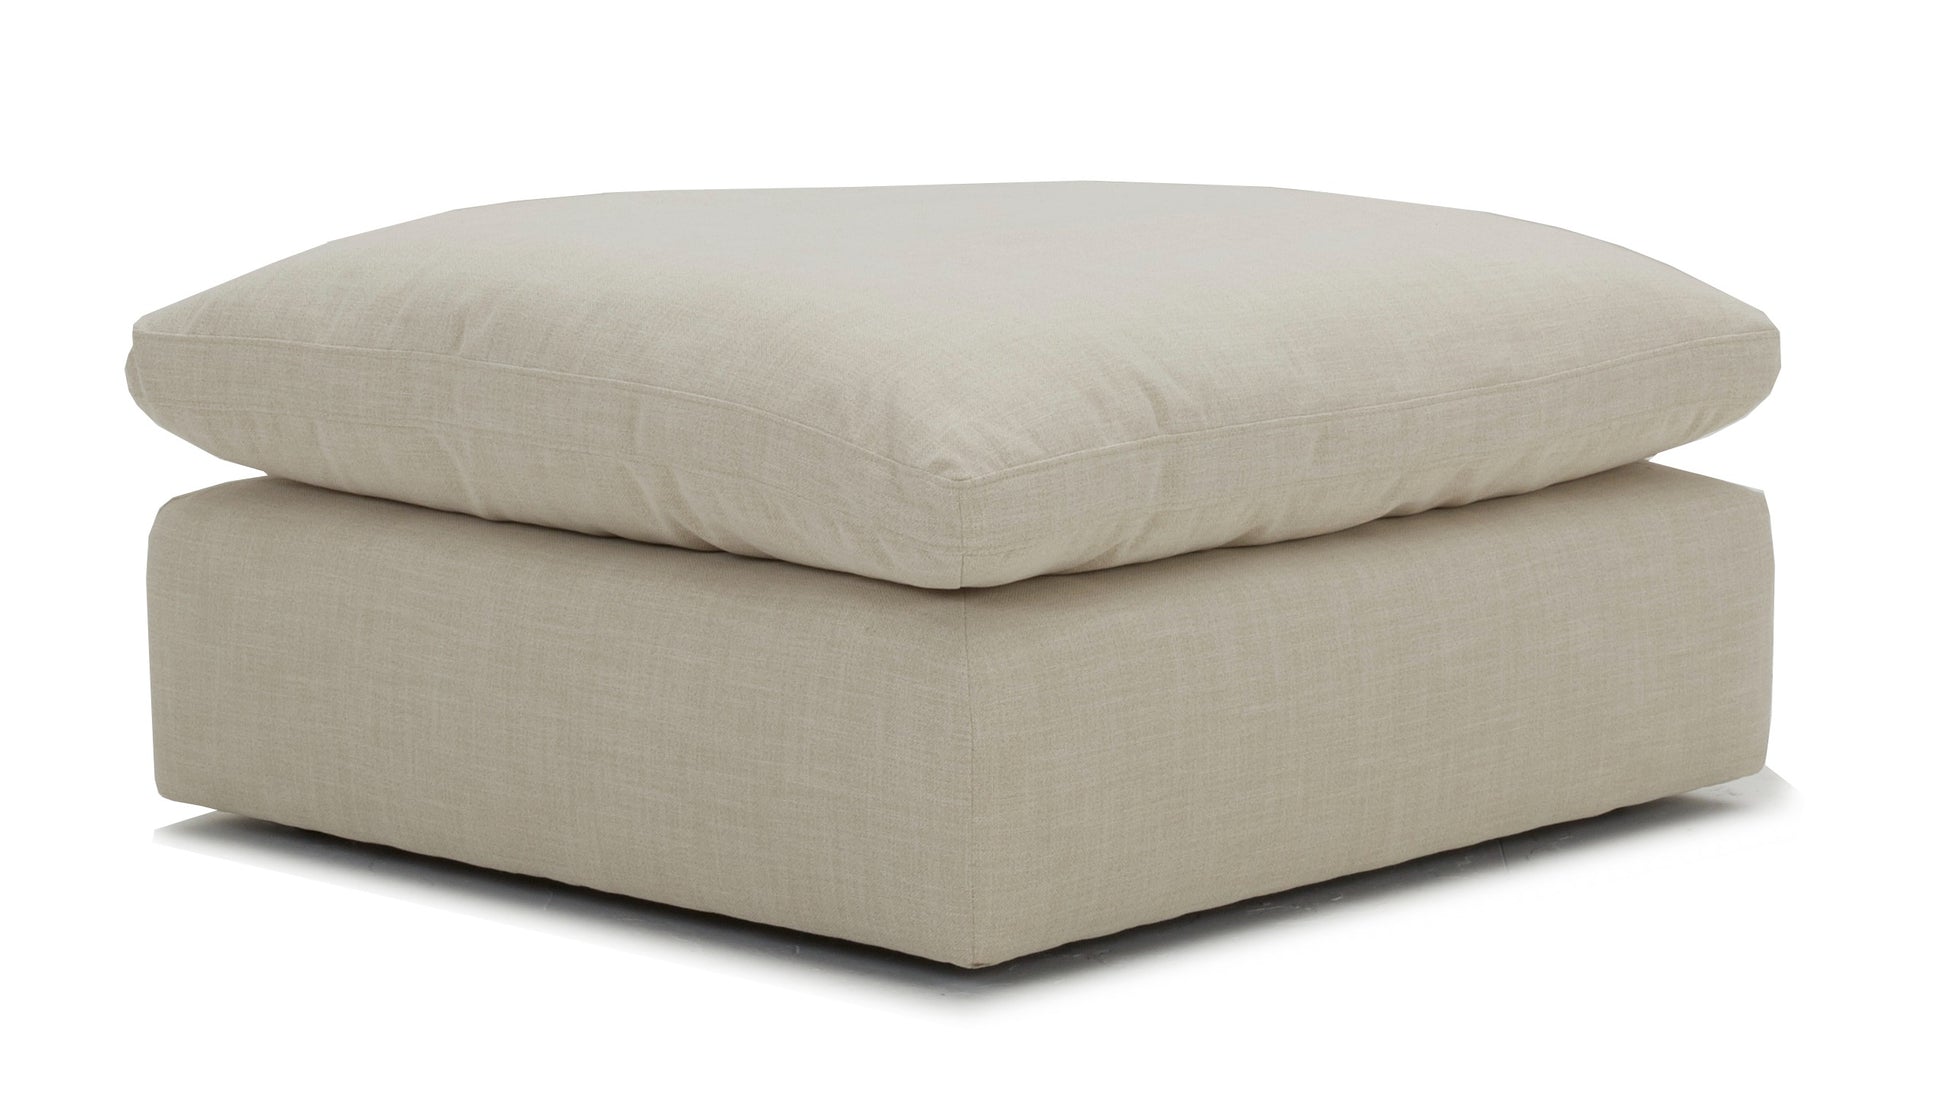 VIG Furniture Divani Casa Lennon Beige Fabric Sectional Sofa Set